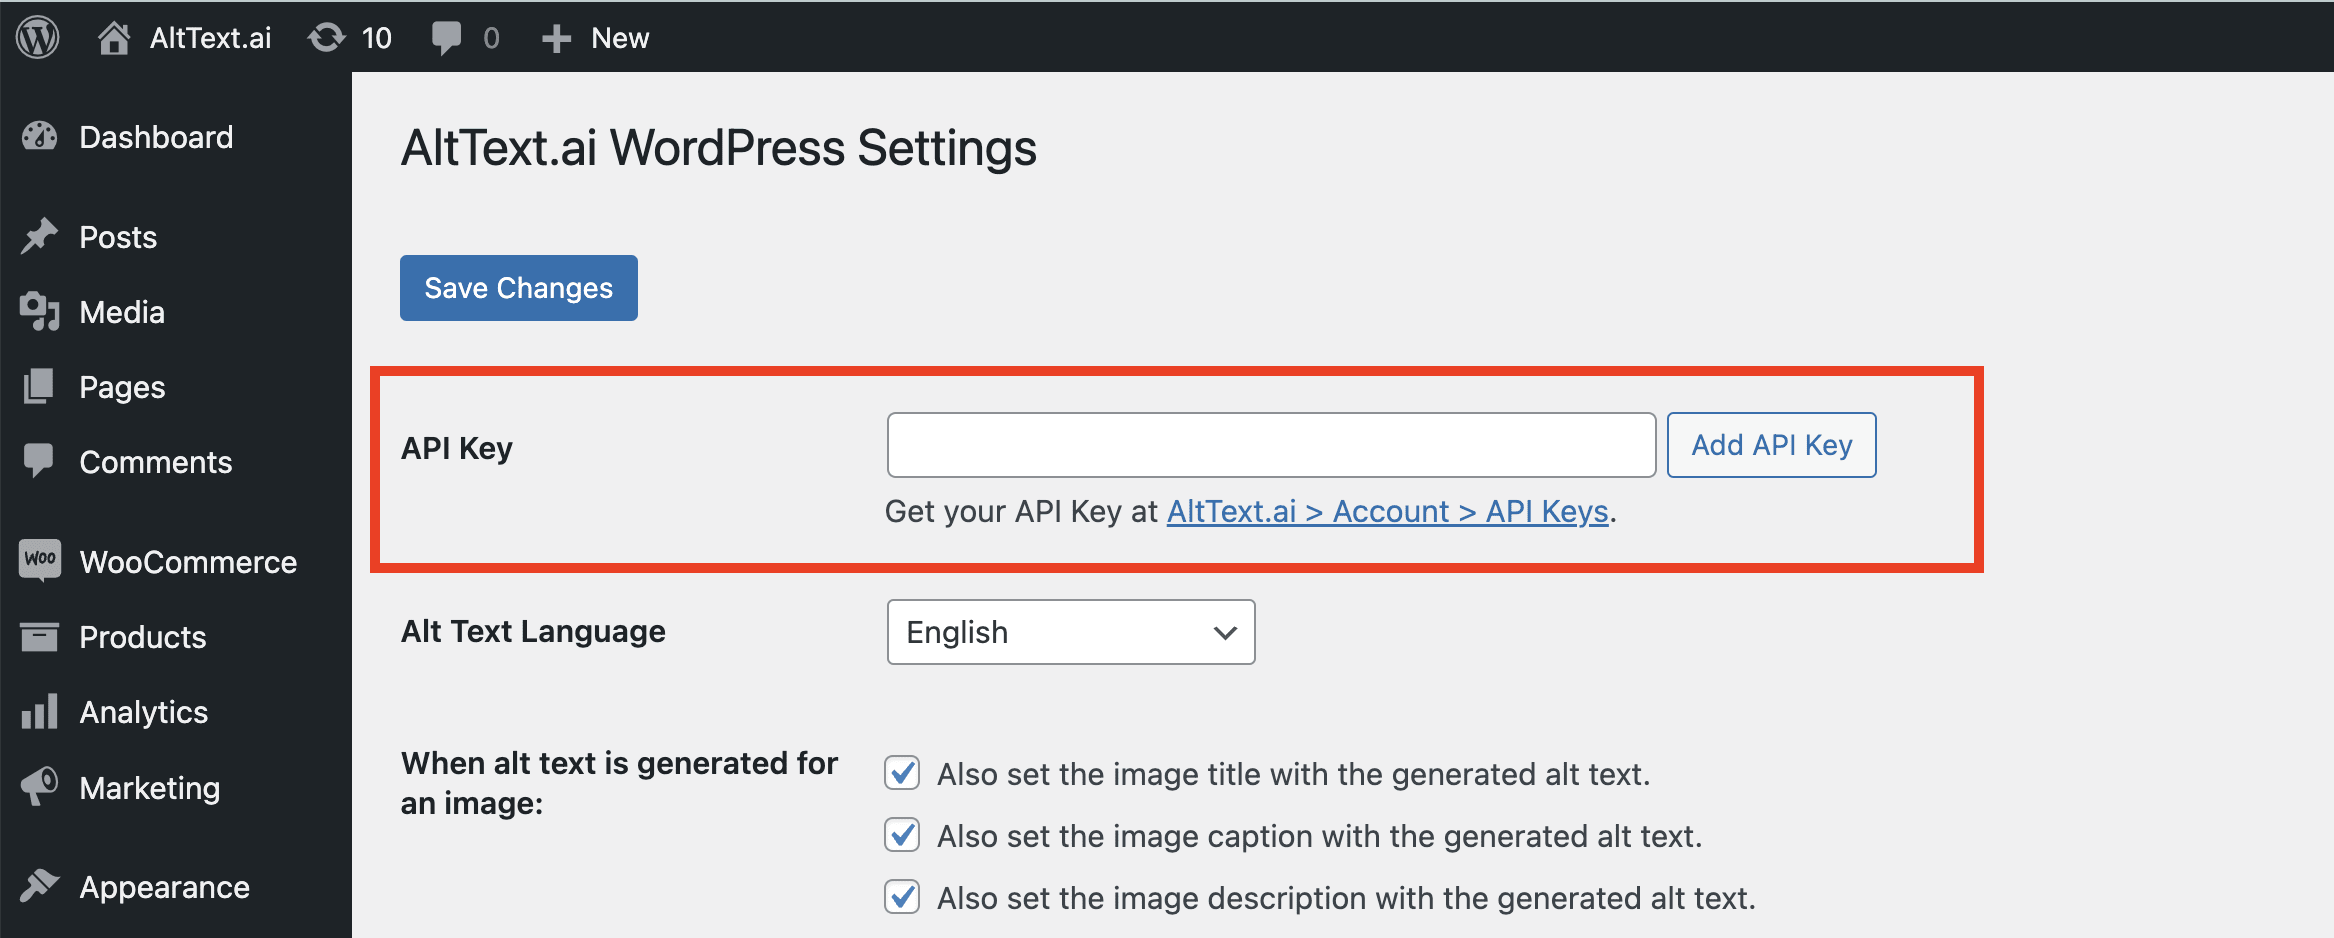 Screenshot of AltText.ai WordPress Plugin settings for API Key.